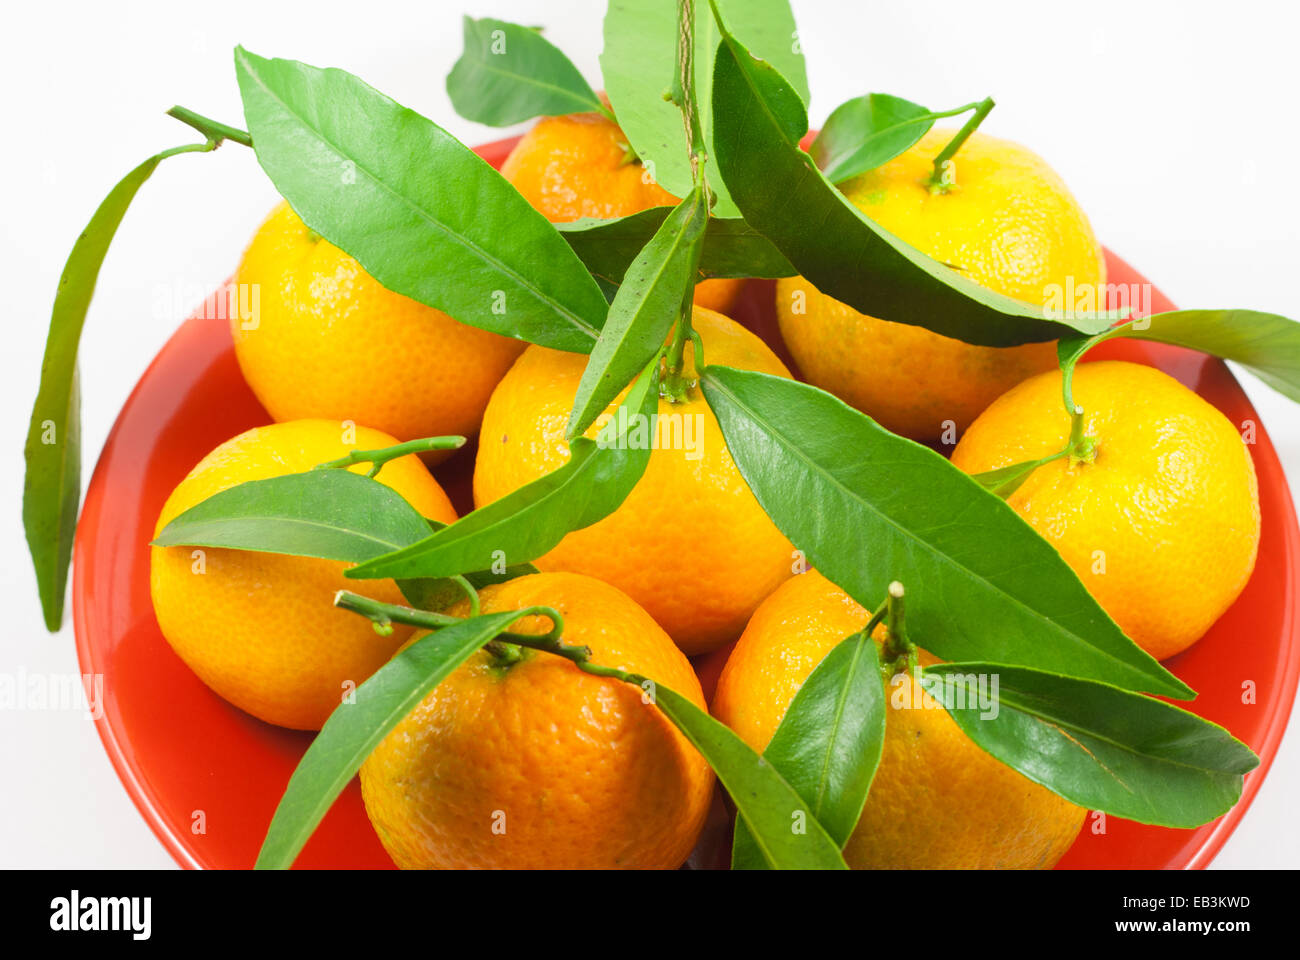 Orange mandarin / clementine / tangerine with green leafs Stock Photo